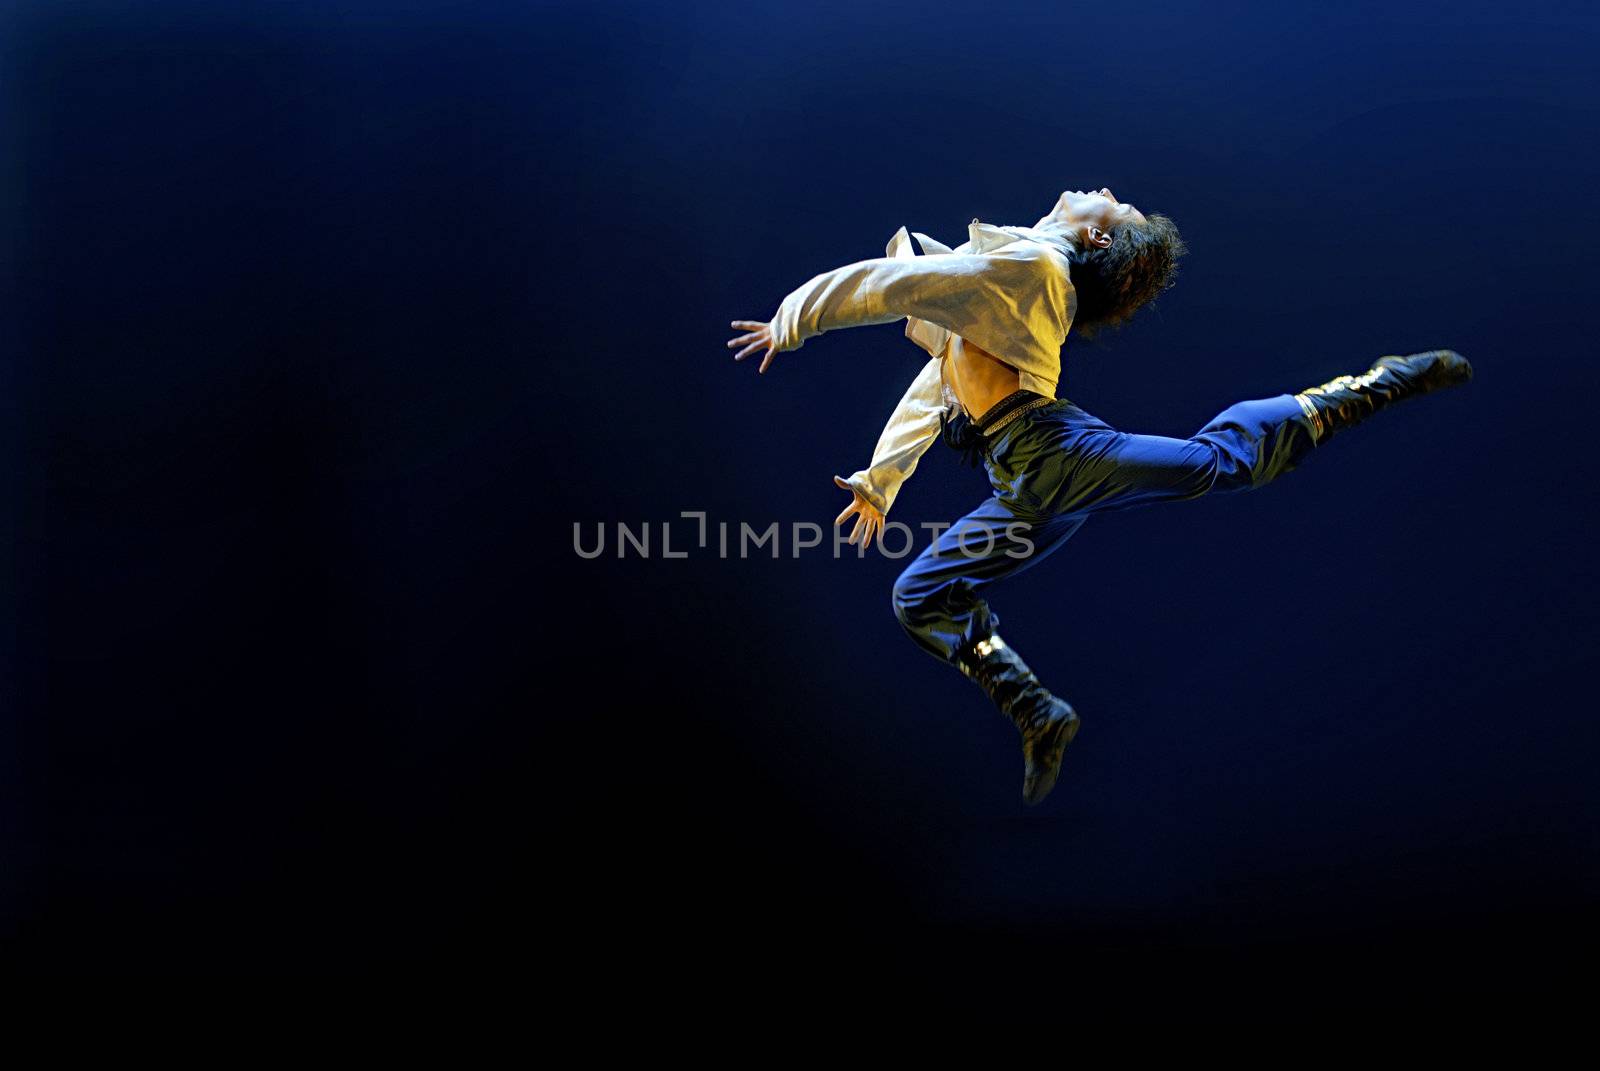 Jumping dancer by jackq